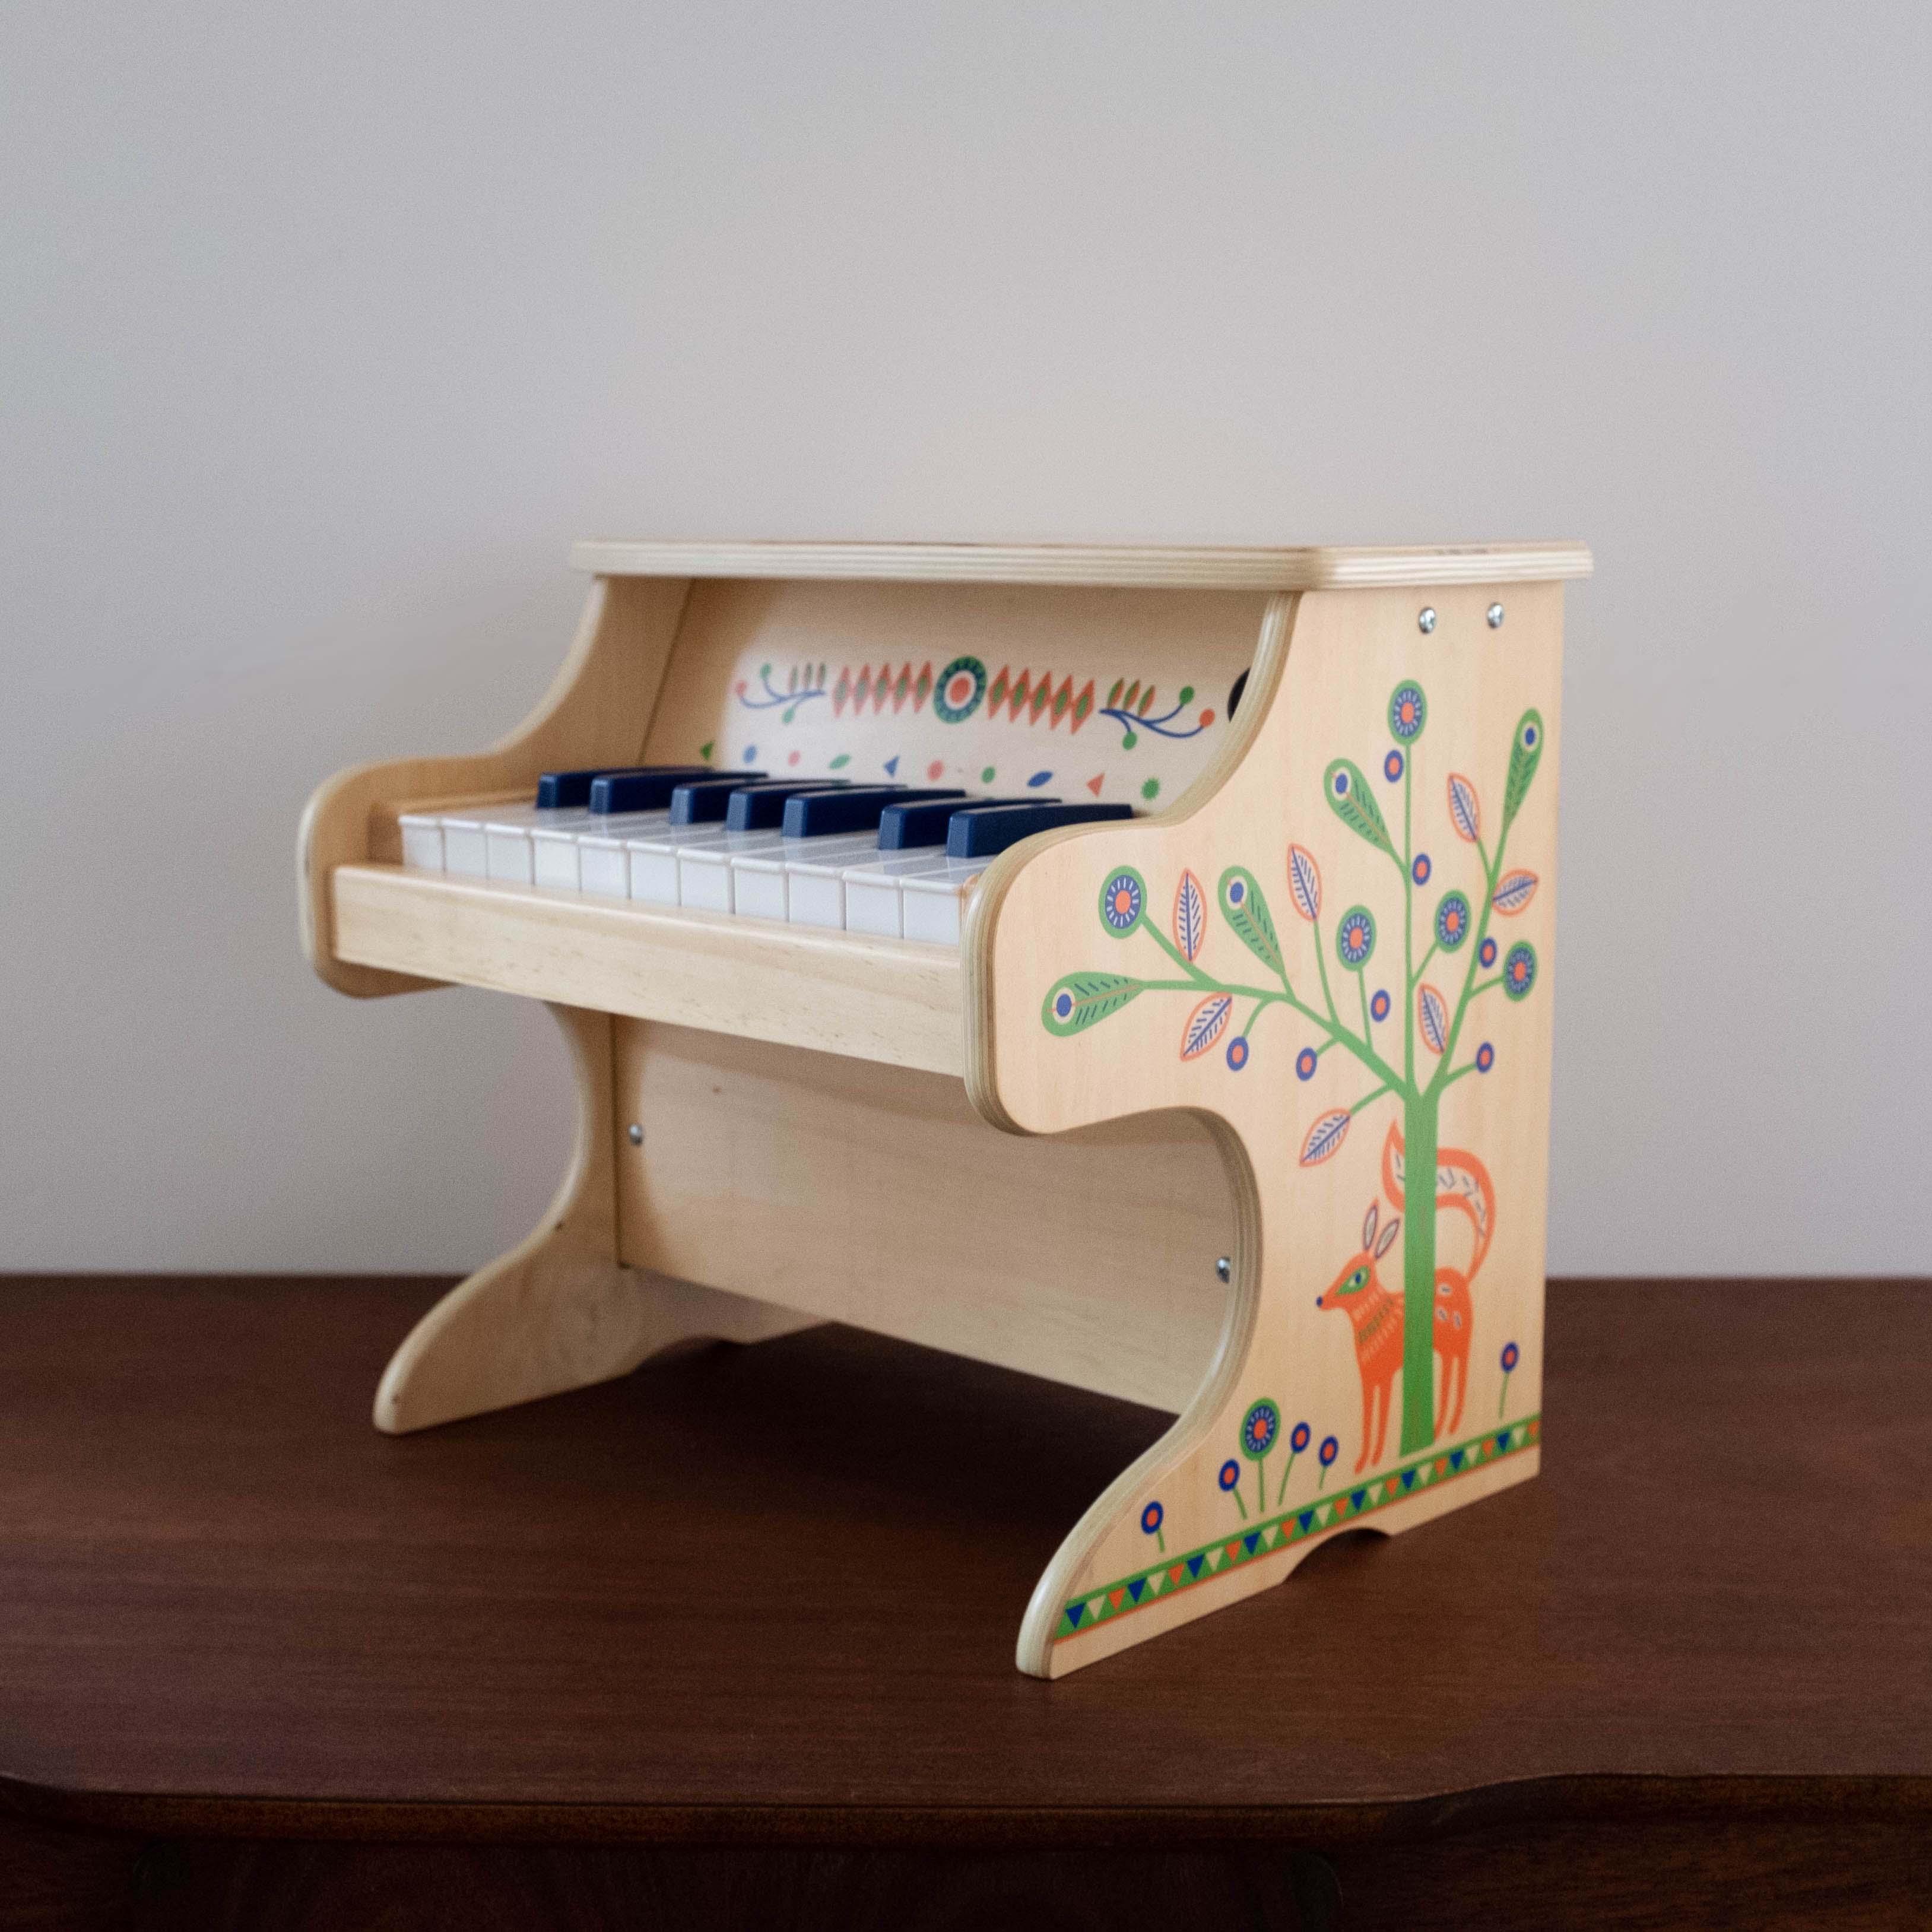 Animambo Wooden Electronic Piano